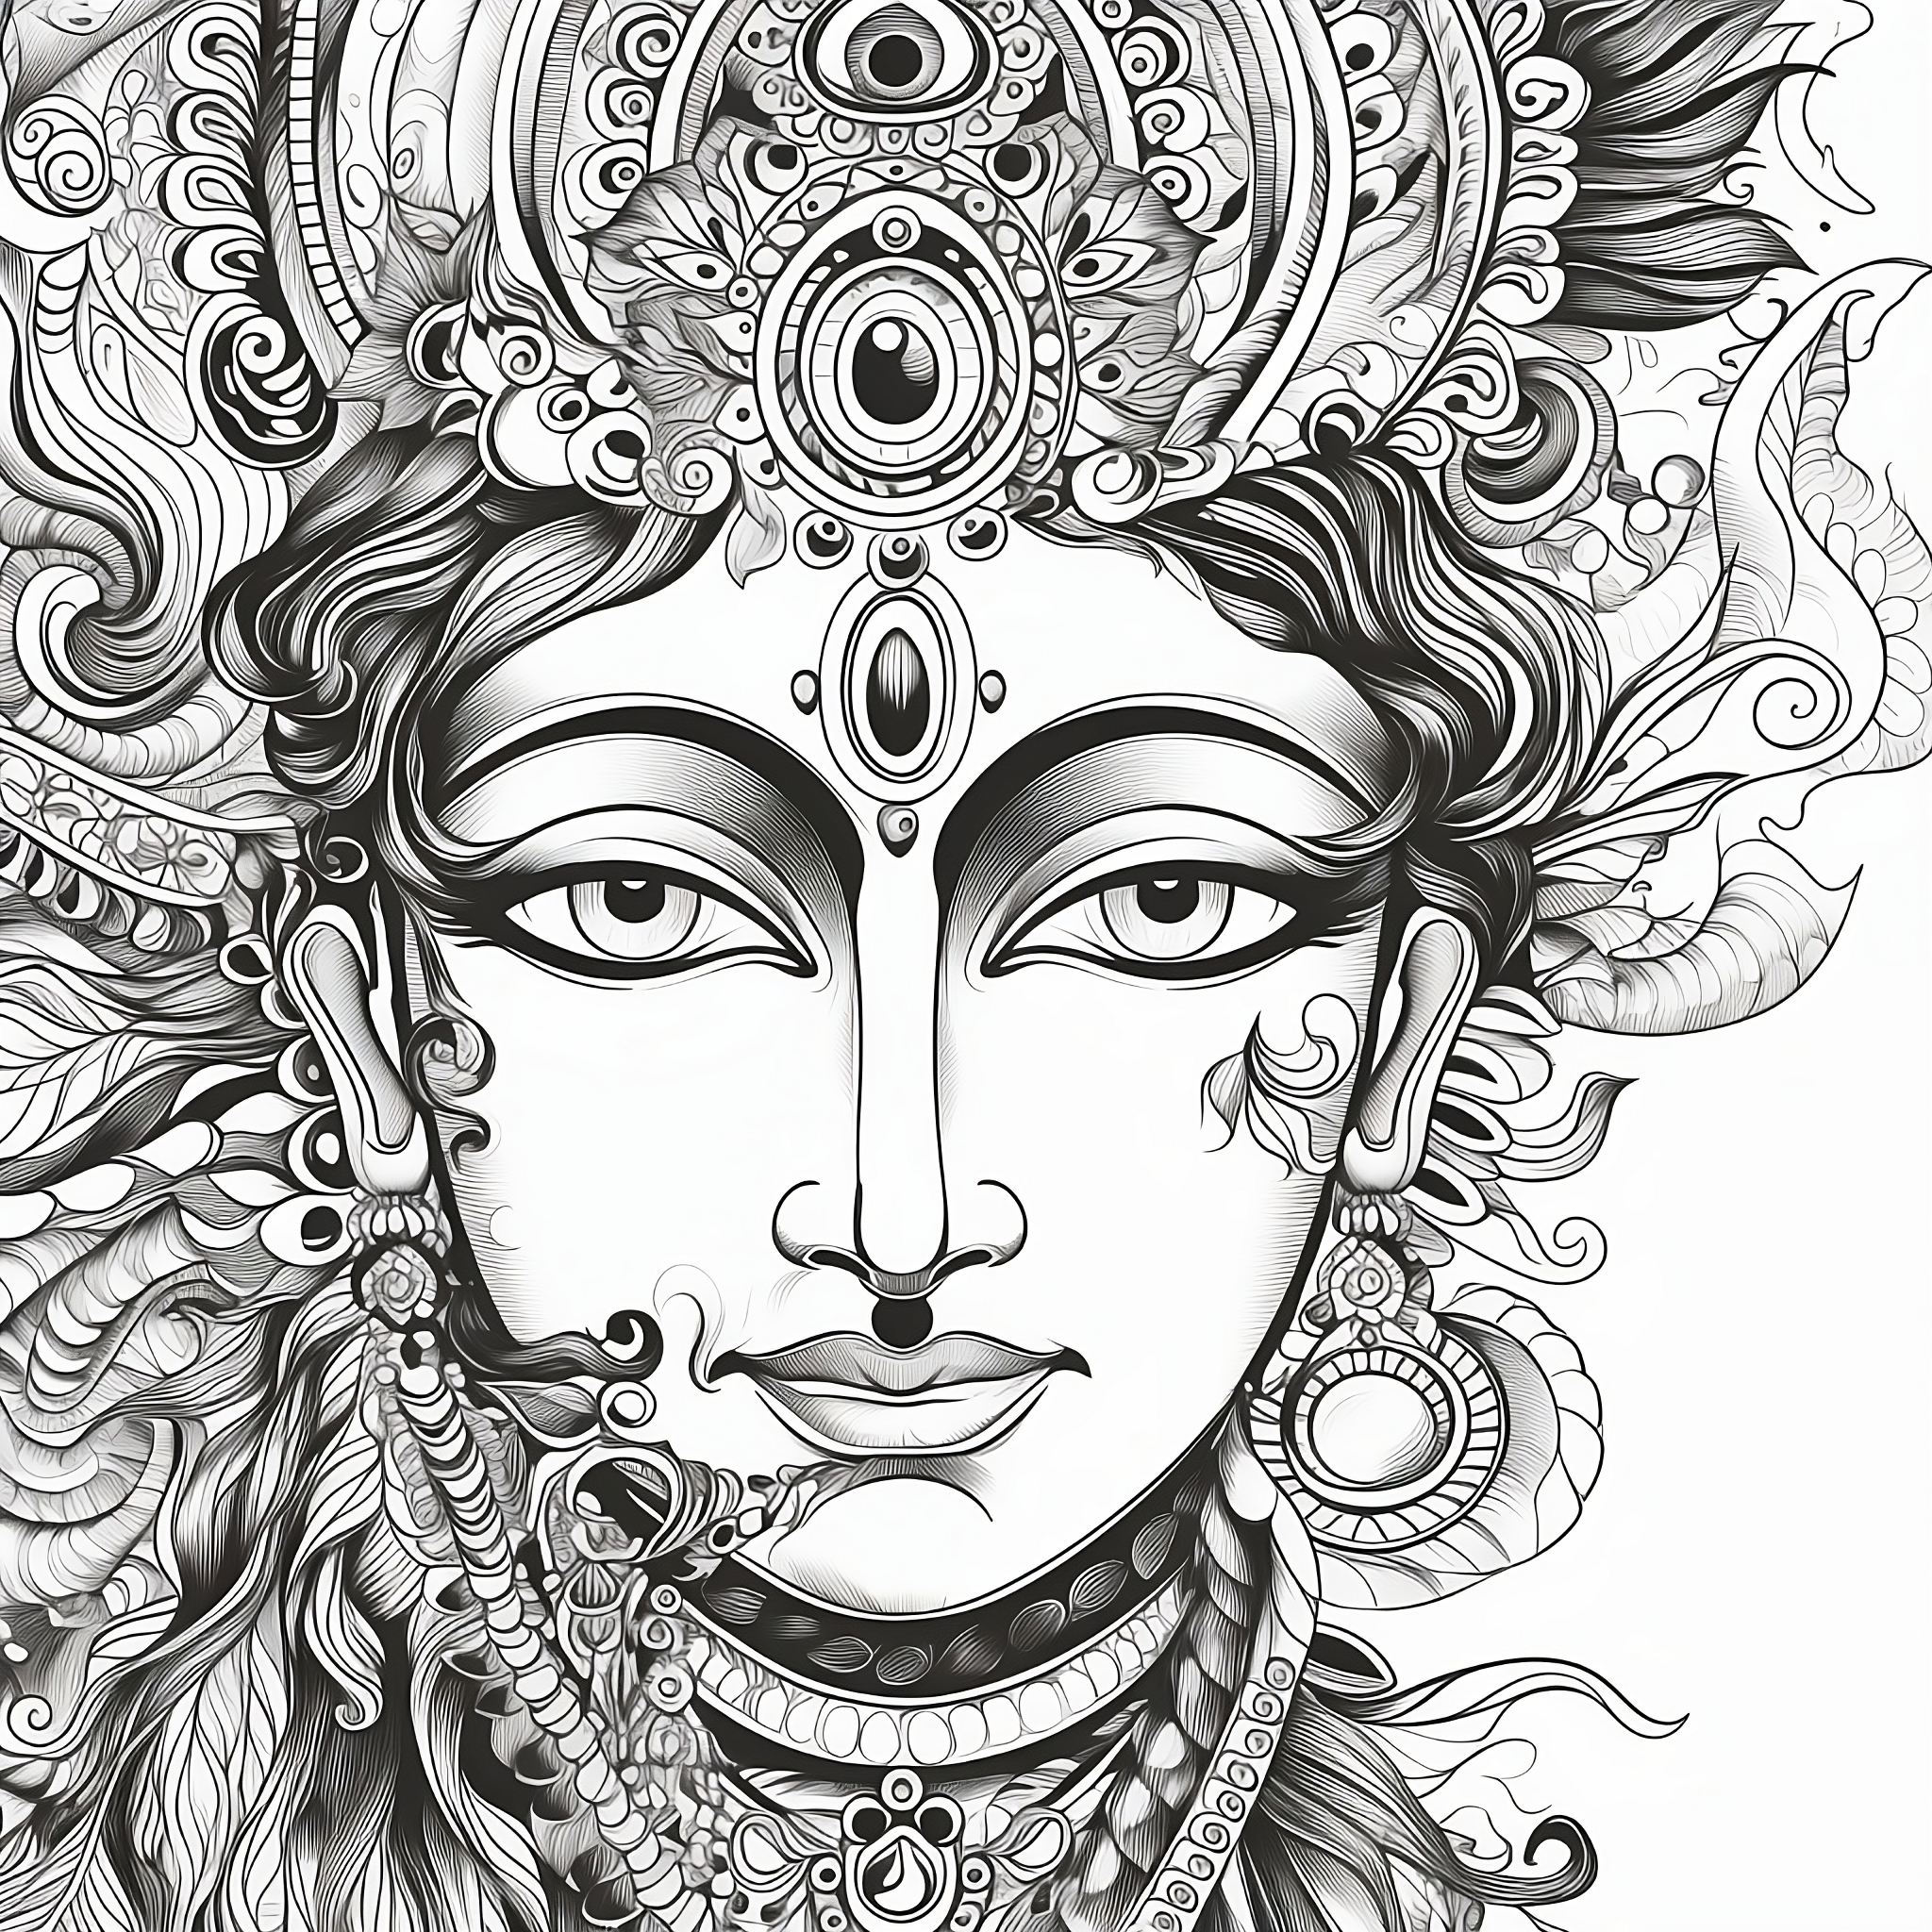 Divine Beauty: A Captivating Black Ink Art Print of Lord Krishna